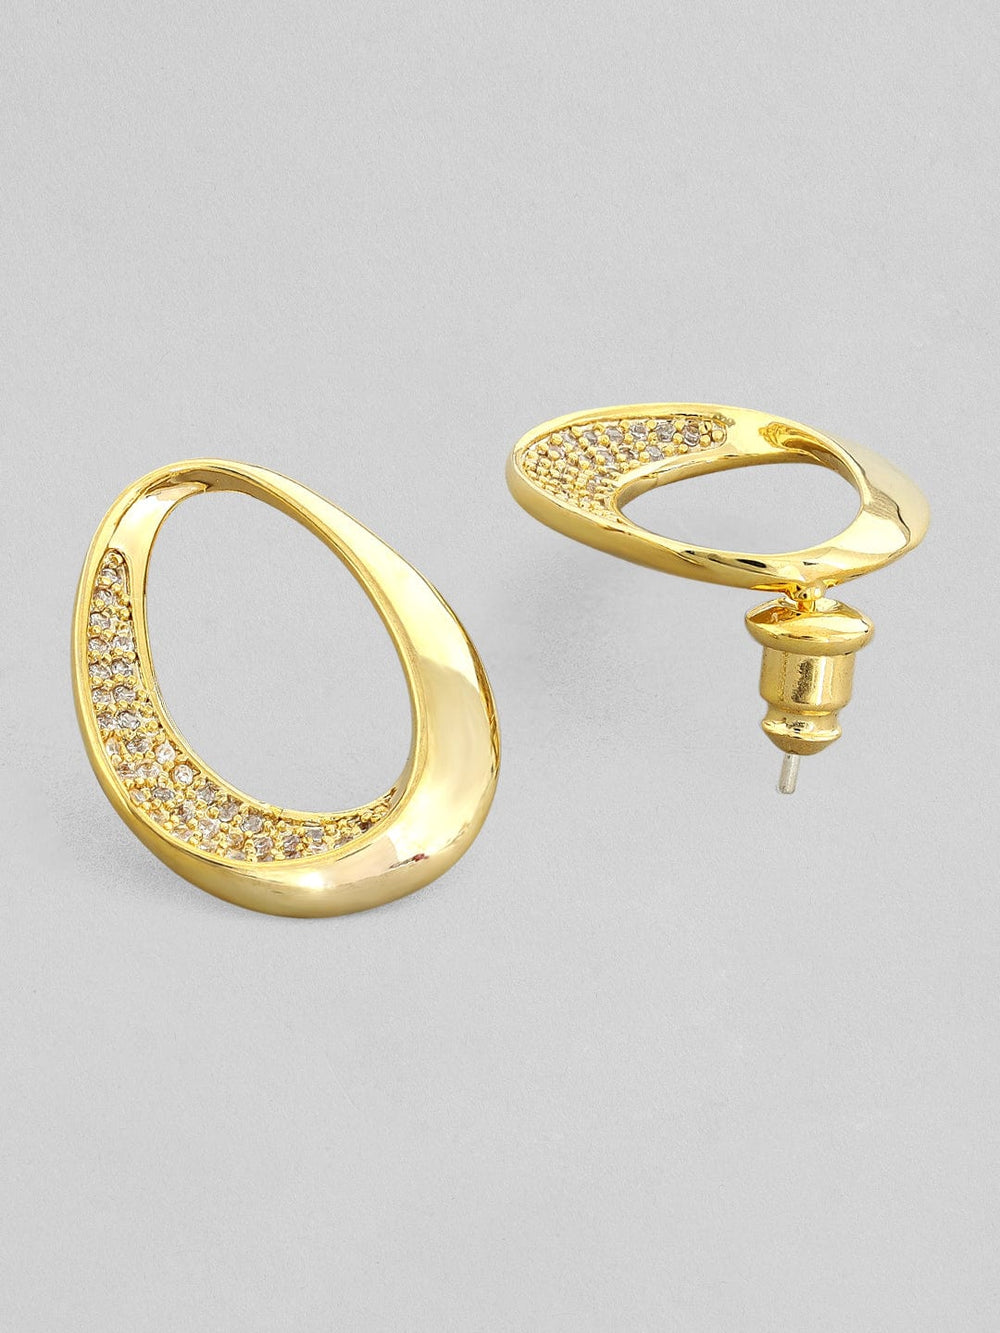 Rubans Voguish 18K Gold Plated Waterproof Stud Zircon Stones In Pave Set Earrings. Earrings